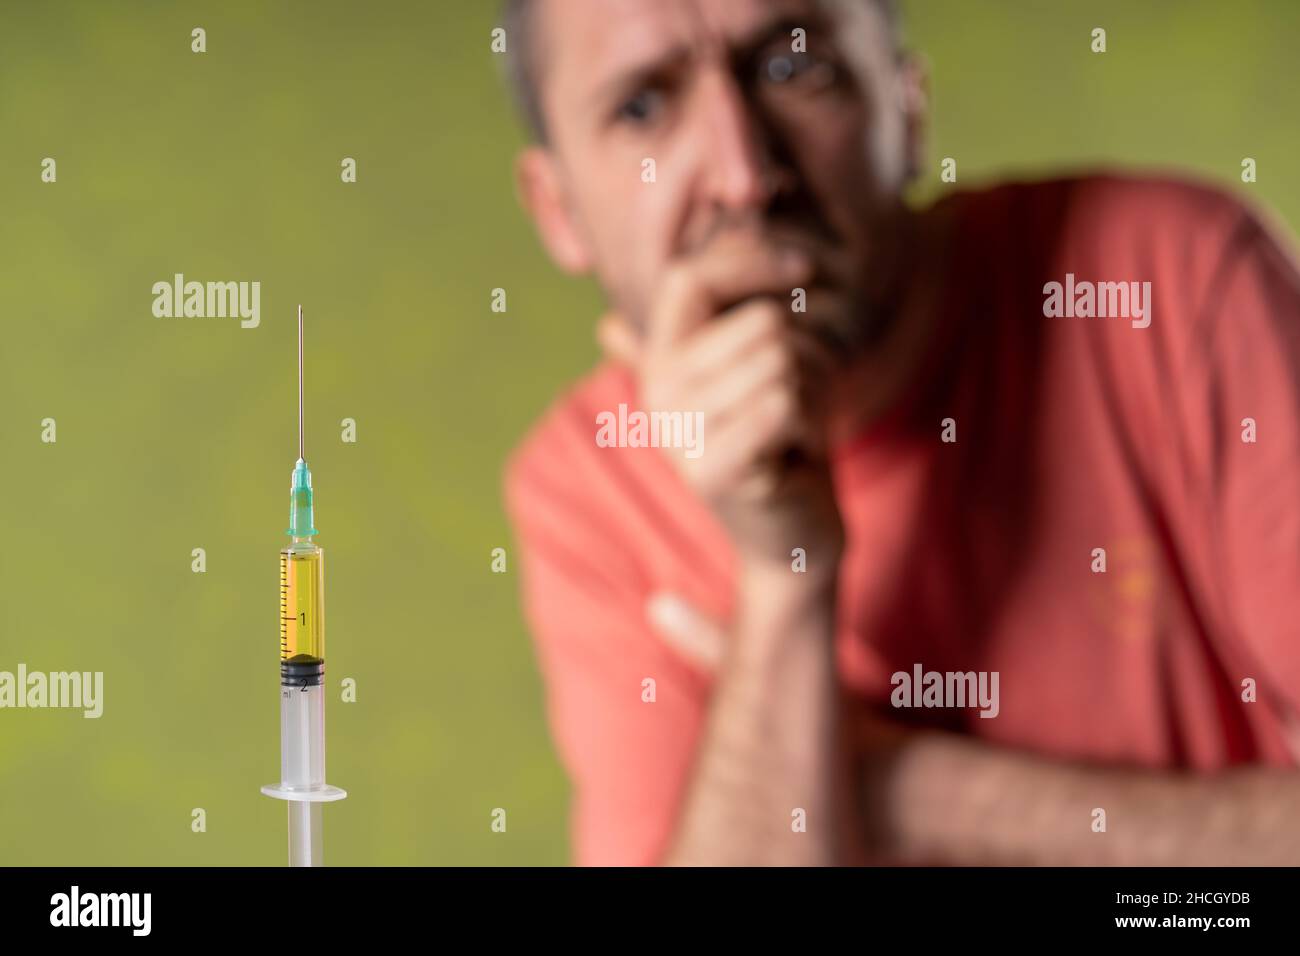 Suspicious man looks doubtfully  the anti covid vaccine. Stock Photo